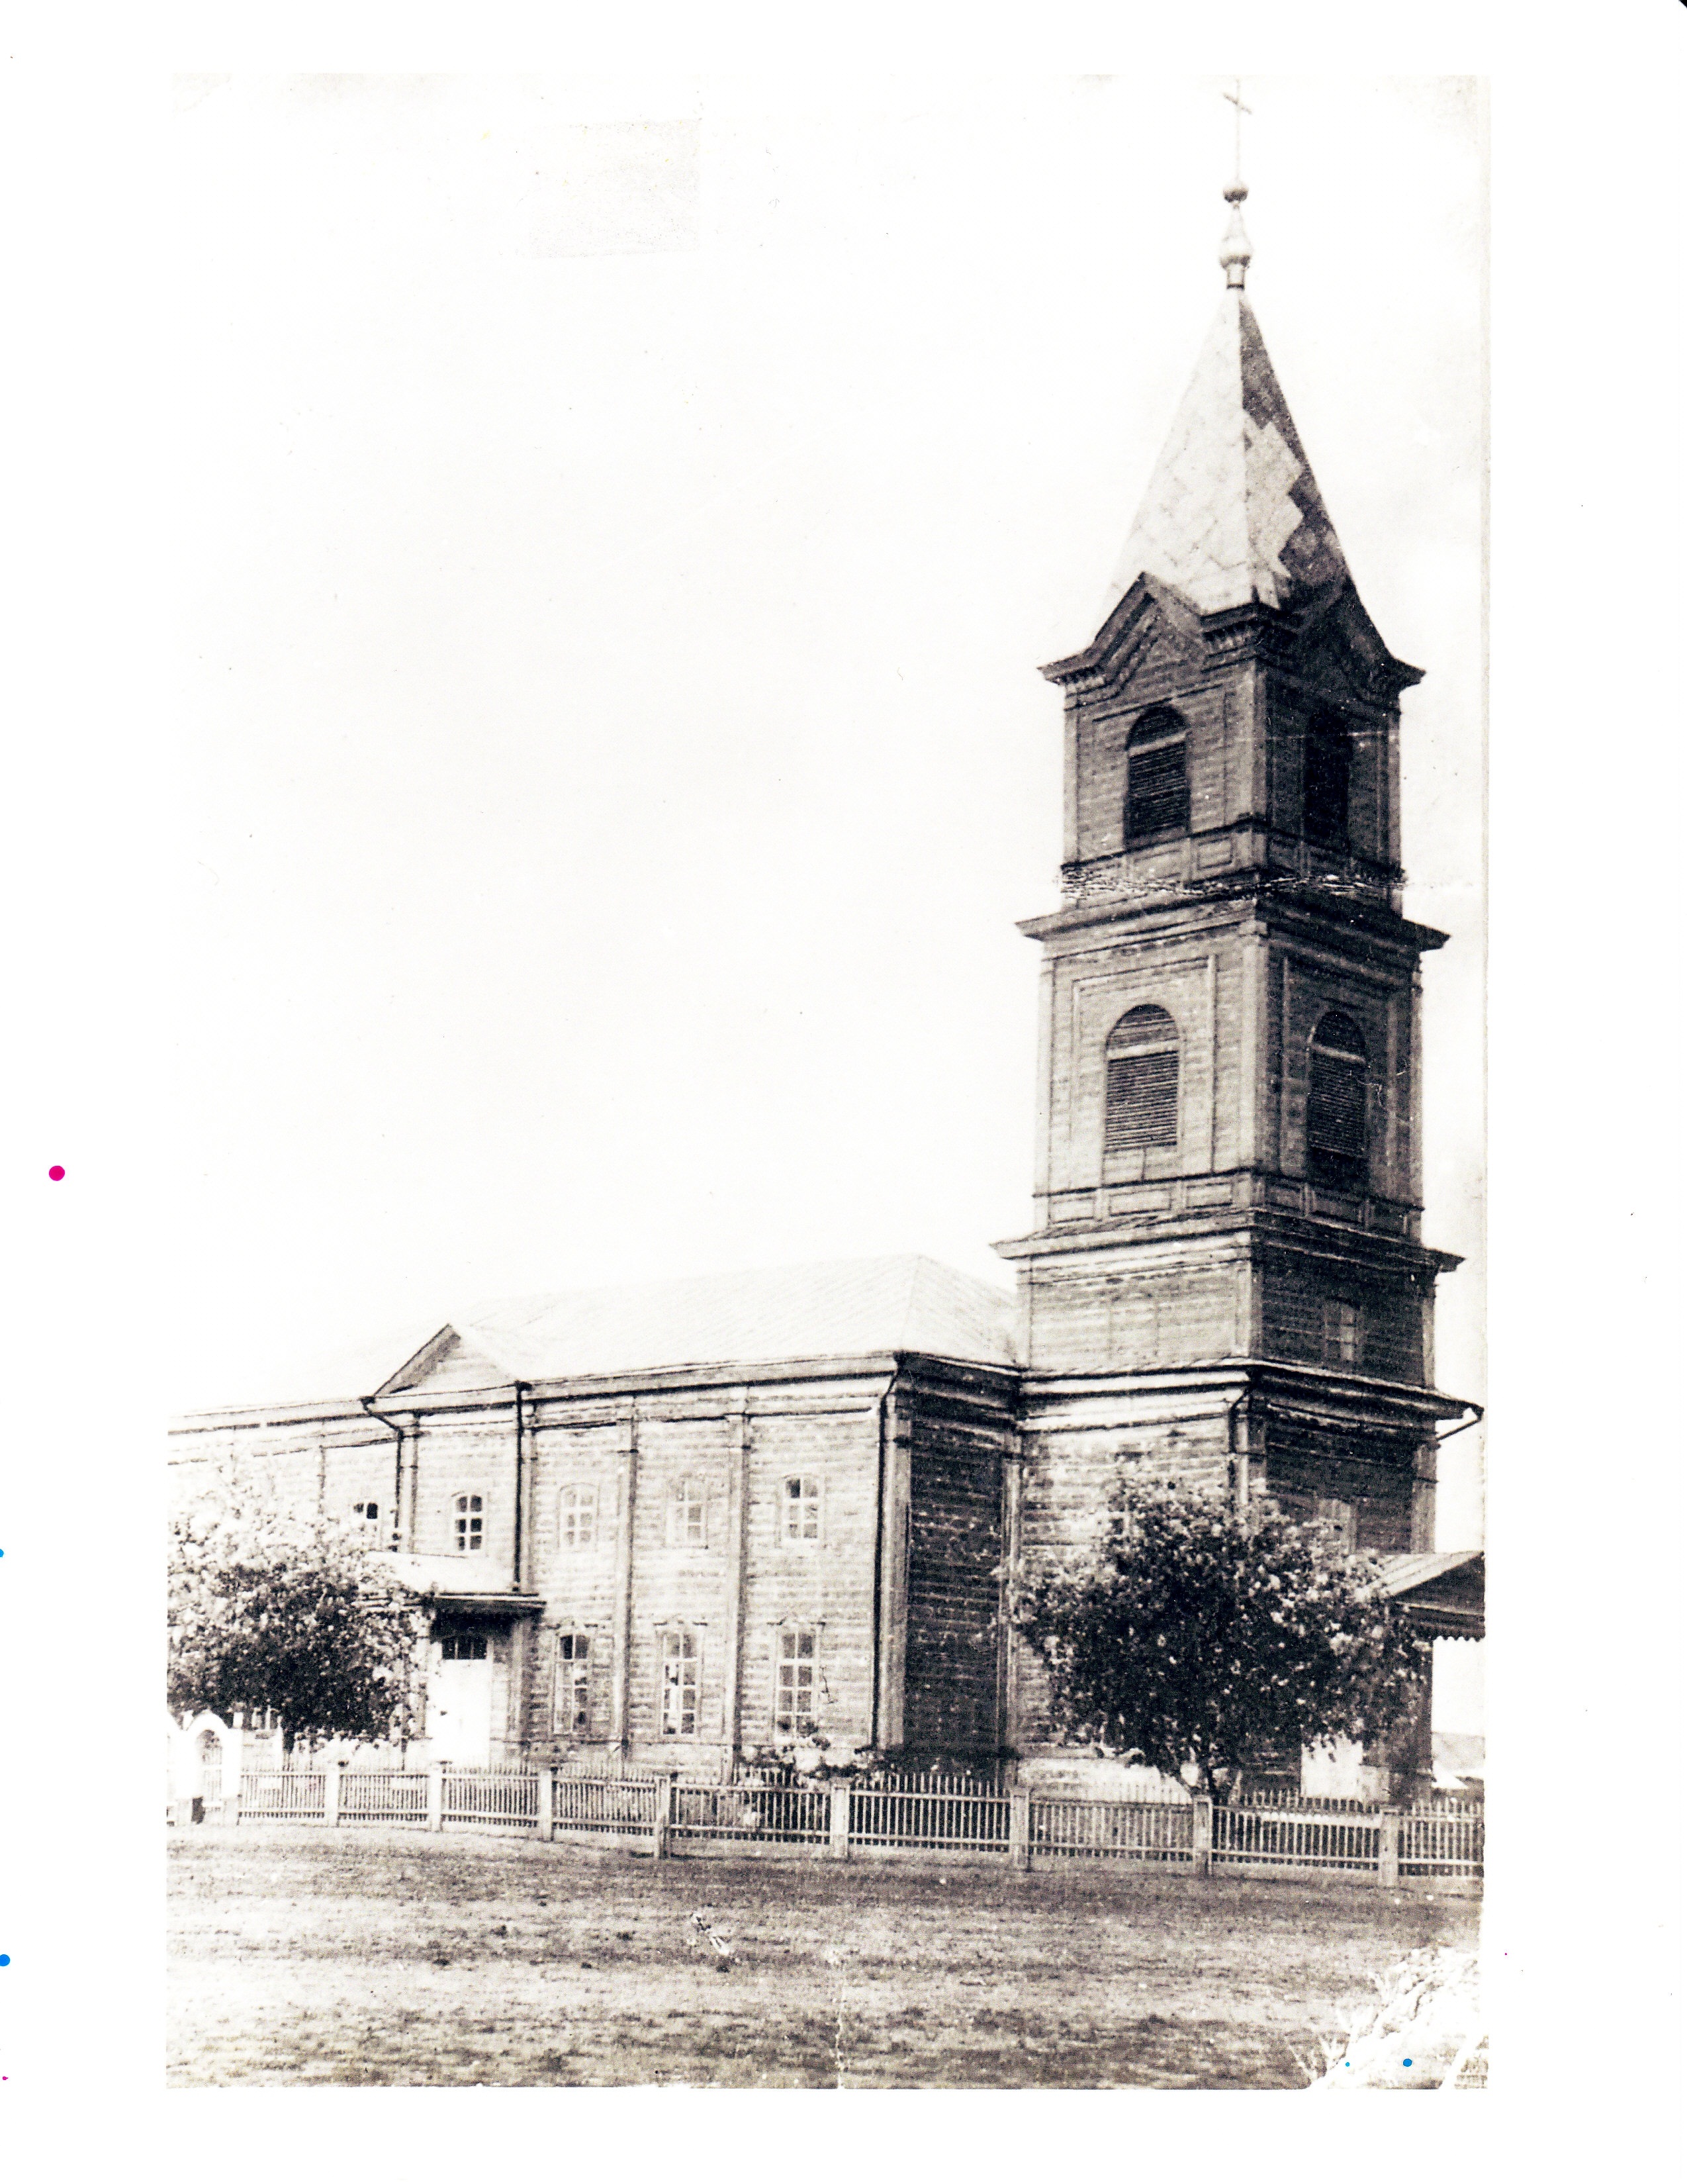 Lutheran Church in Kind. Built in 1875. Source: Bill Pickelhaupt.